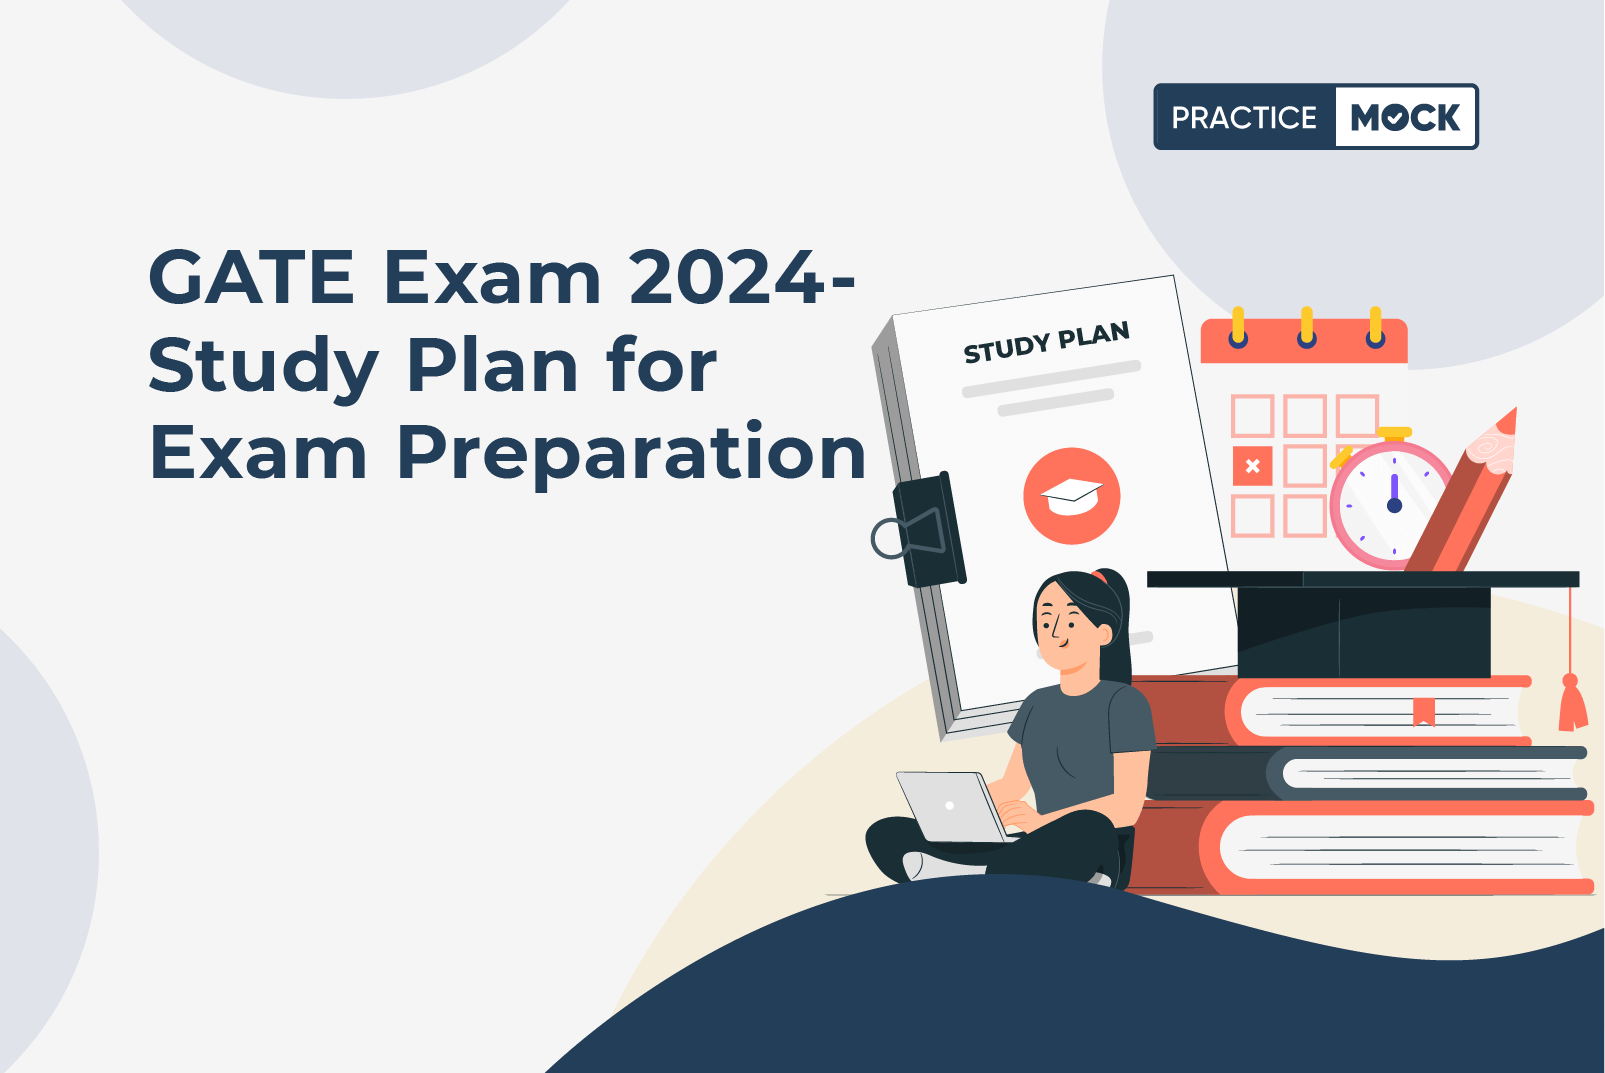 GATE Exam 2024 Study Plan for Exam Preparation PracticeMock